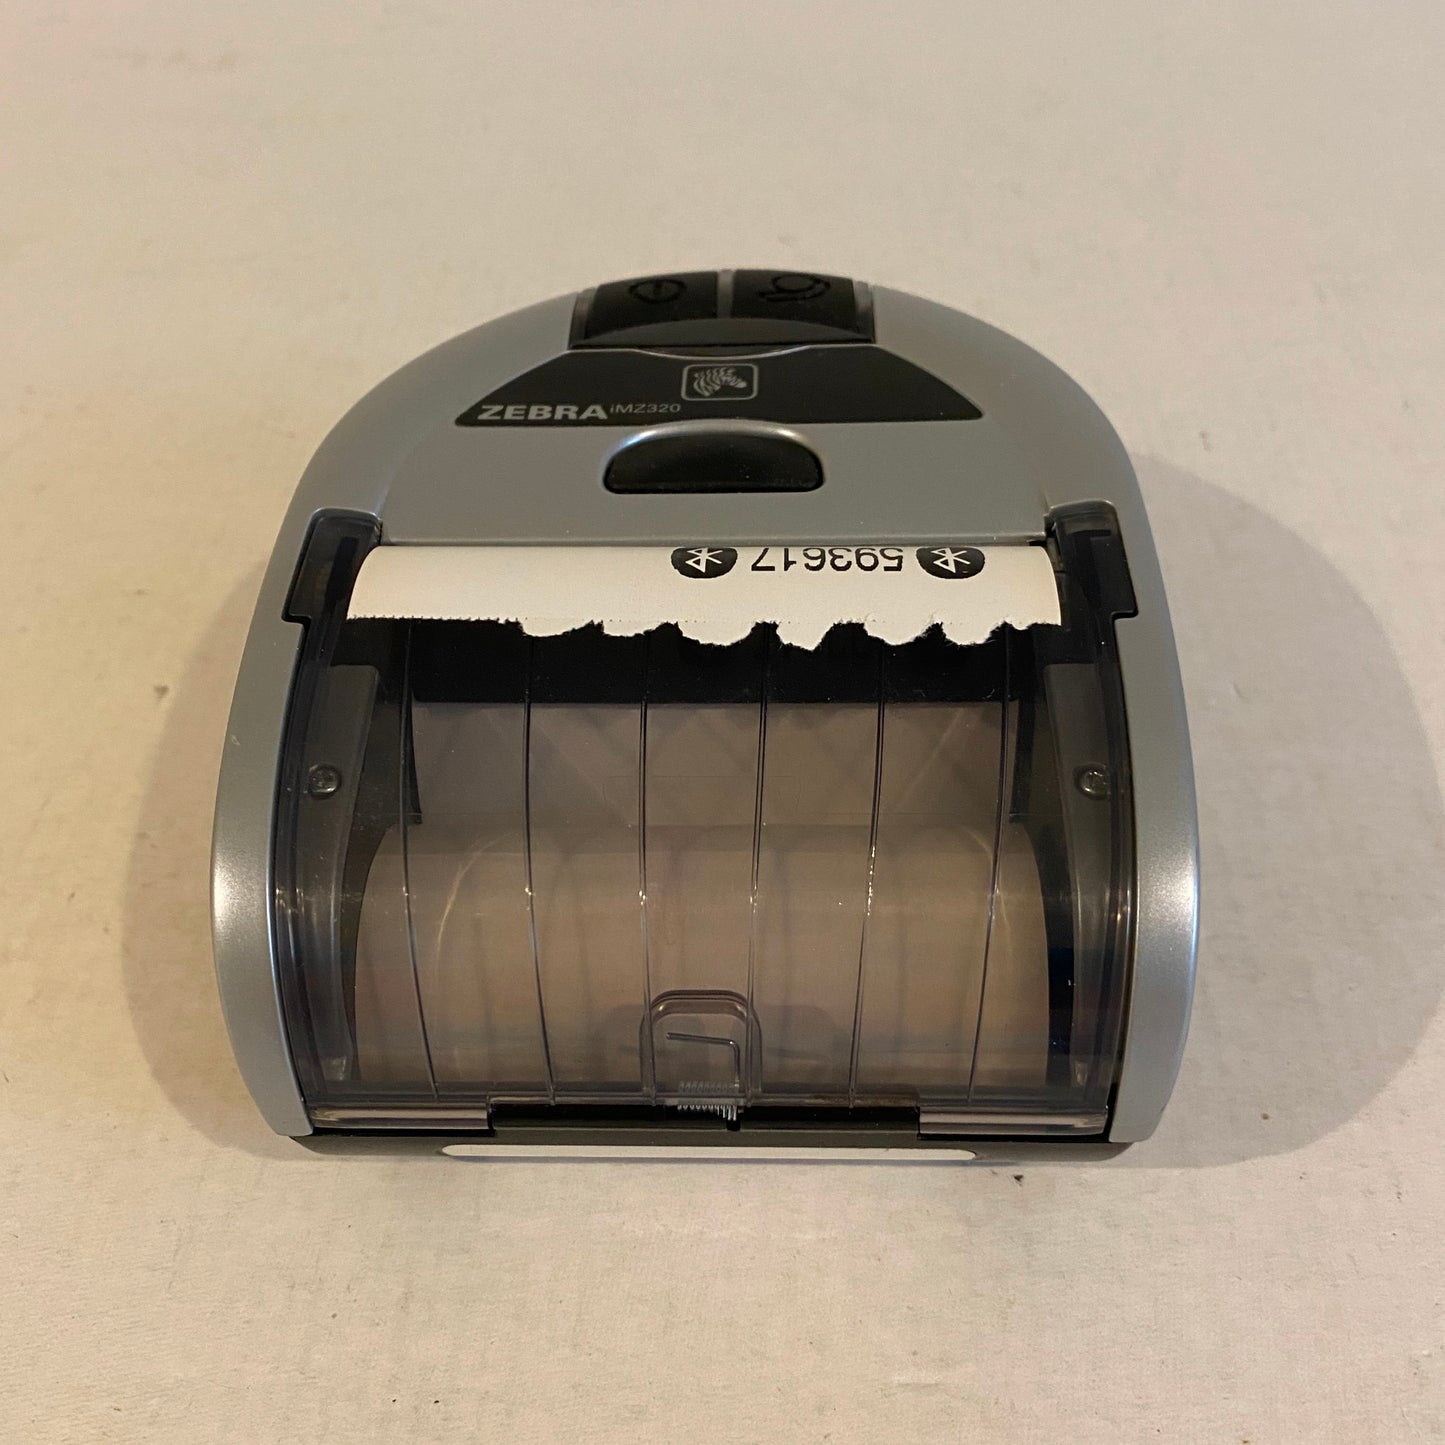 Zebra iMZ320 Mobile Wireless Bluetooth Thermal Printer - 15 batt cycles